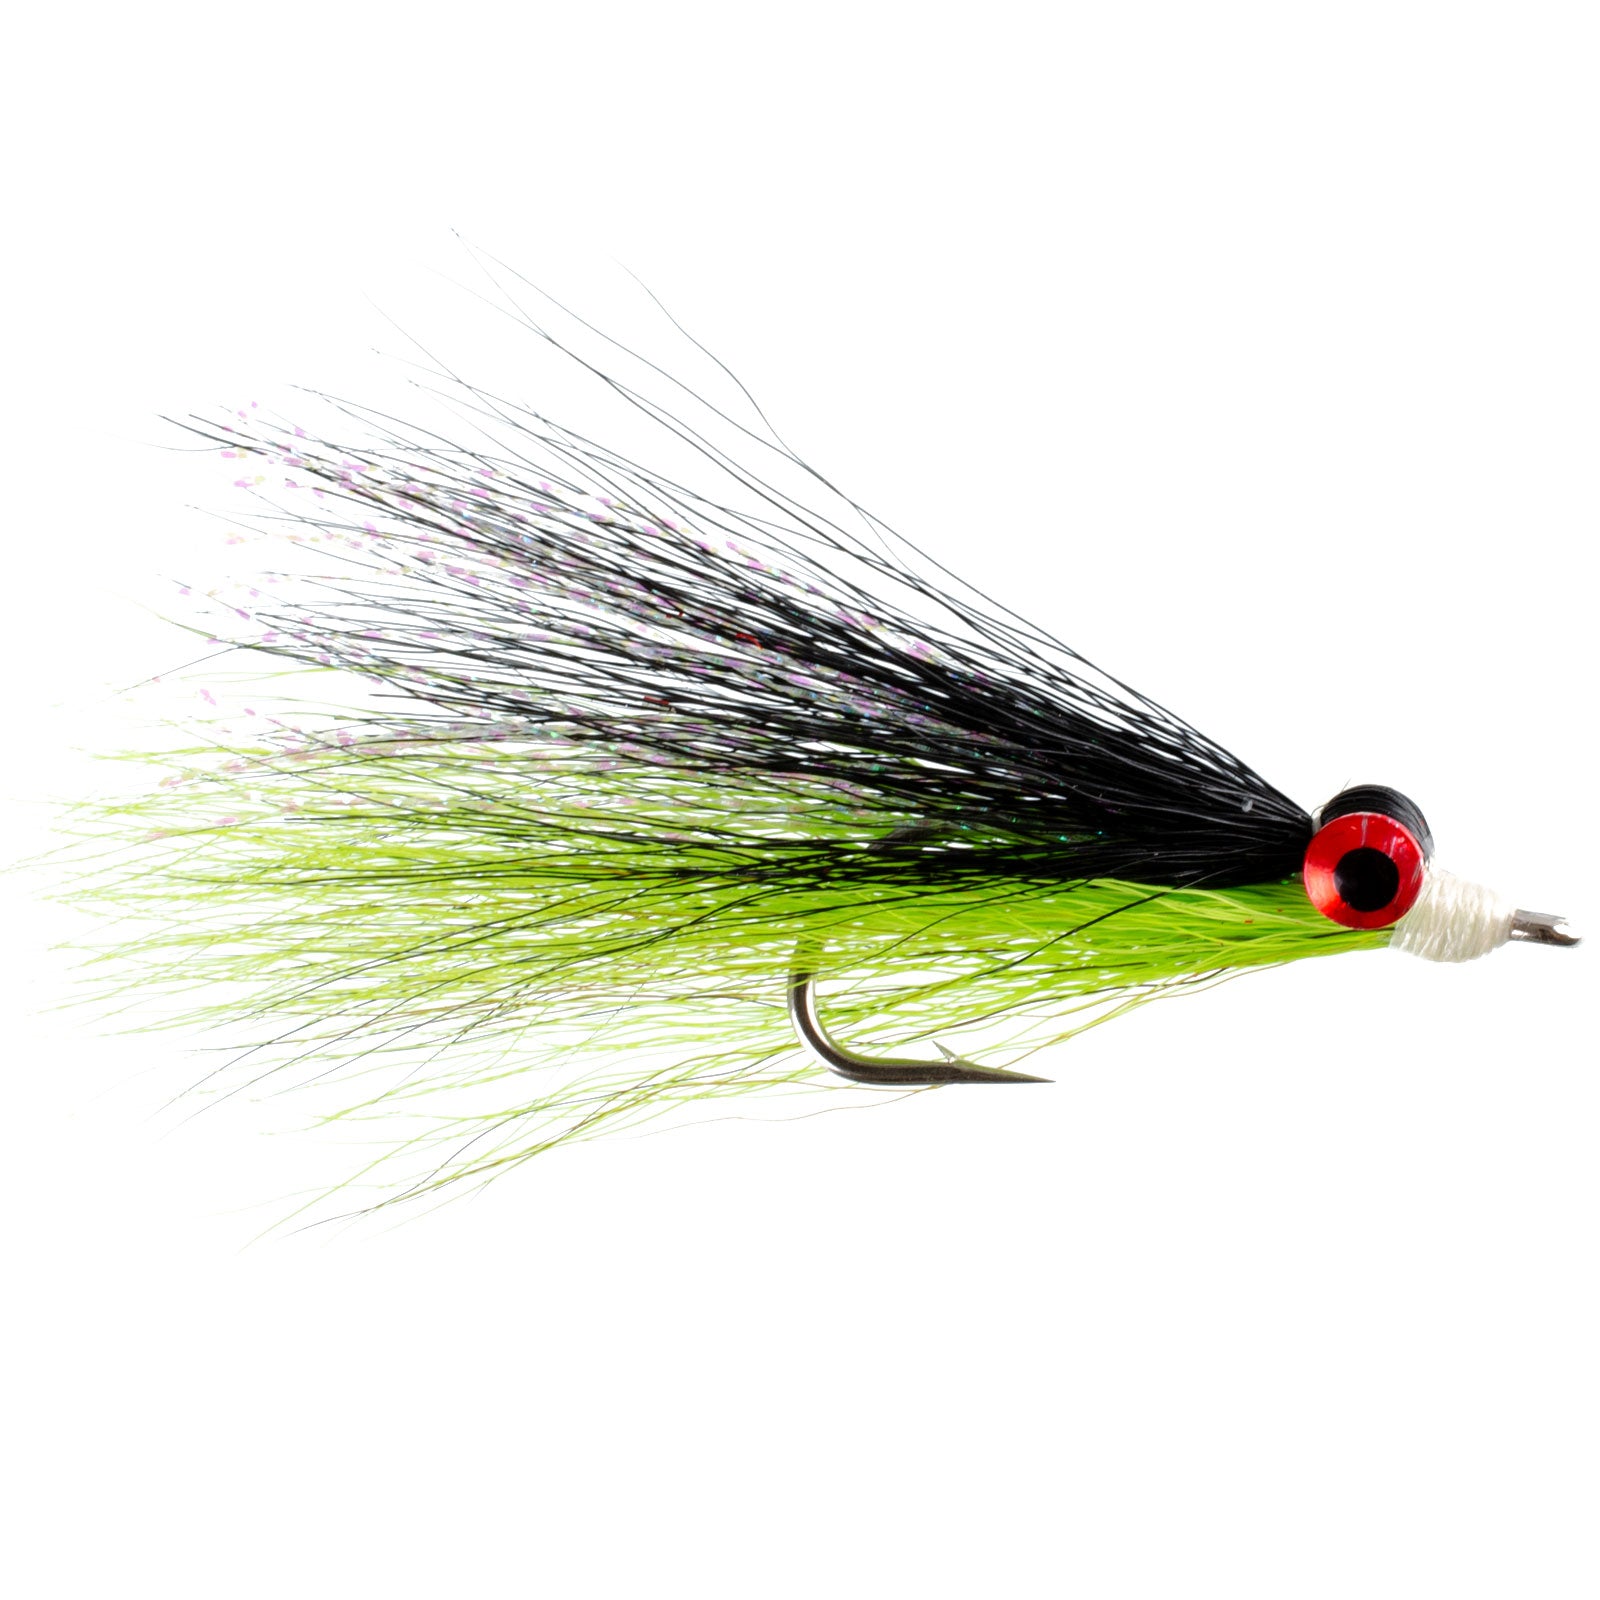 Clousers Deep Minnow Chartreuse Black - Streamer Fly Fishing Flies - 4 Saltwater and Bass Flies - Hook Size 1/0